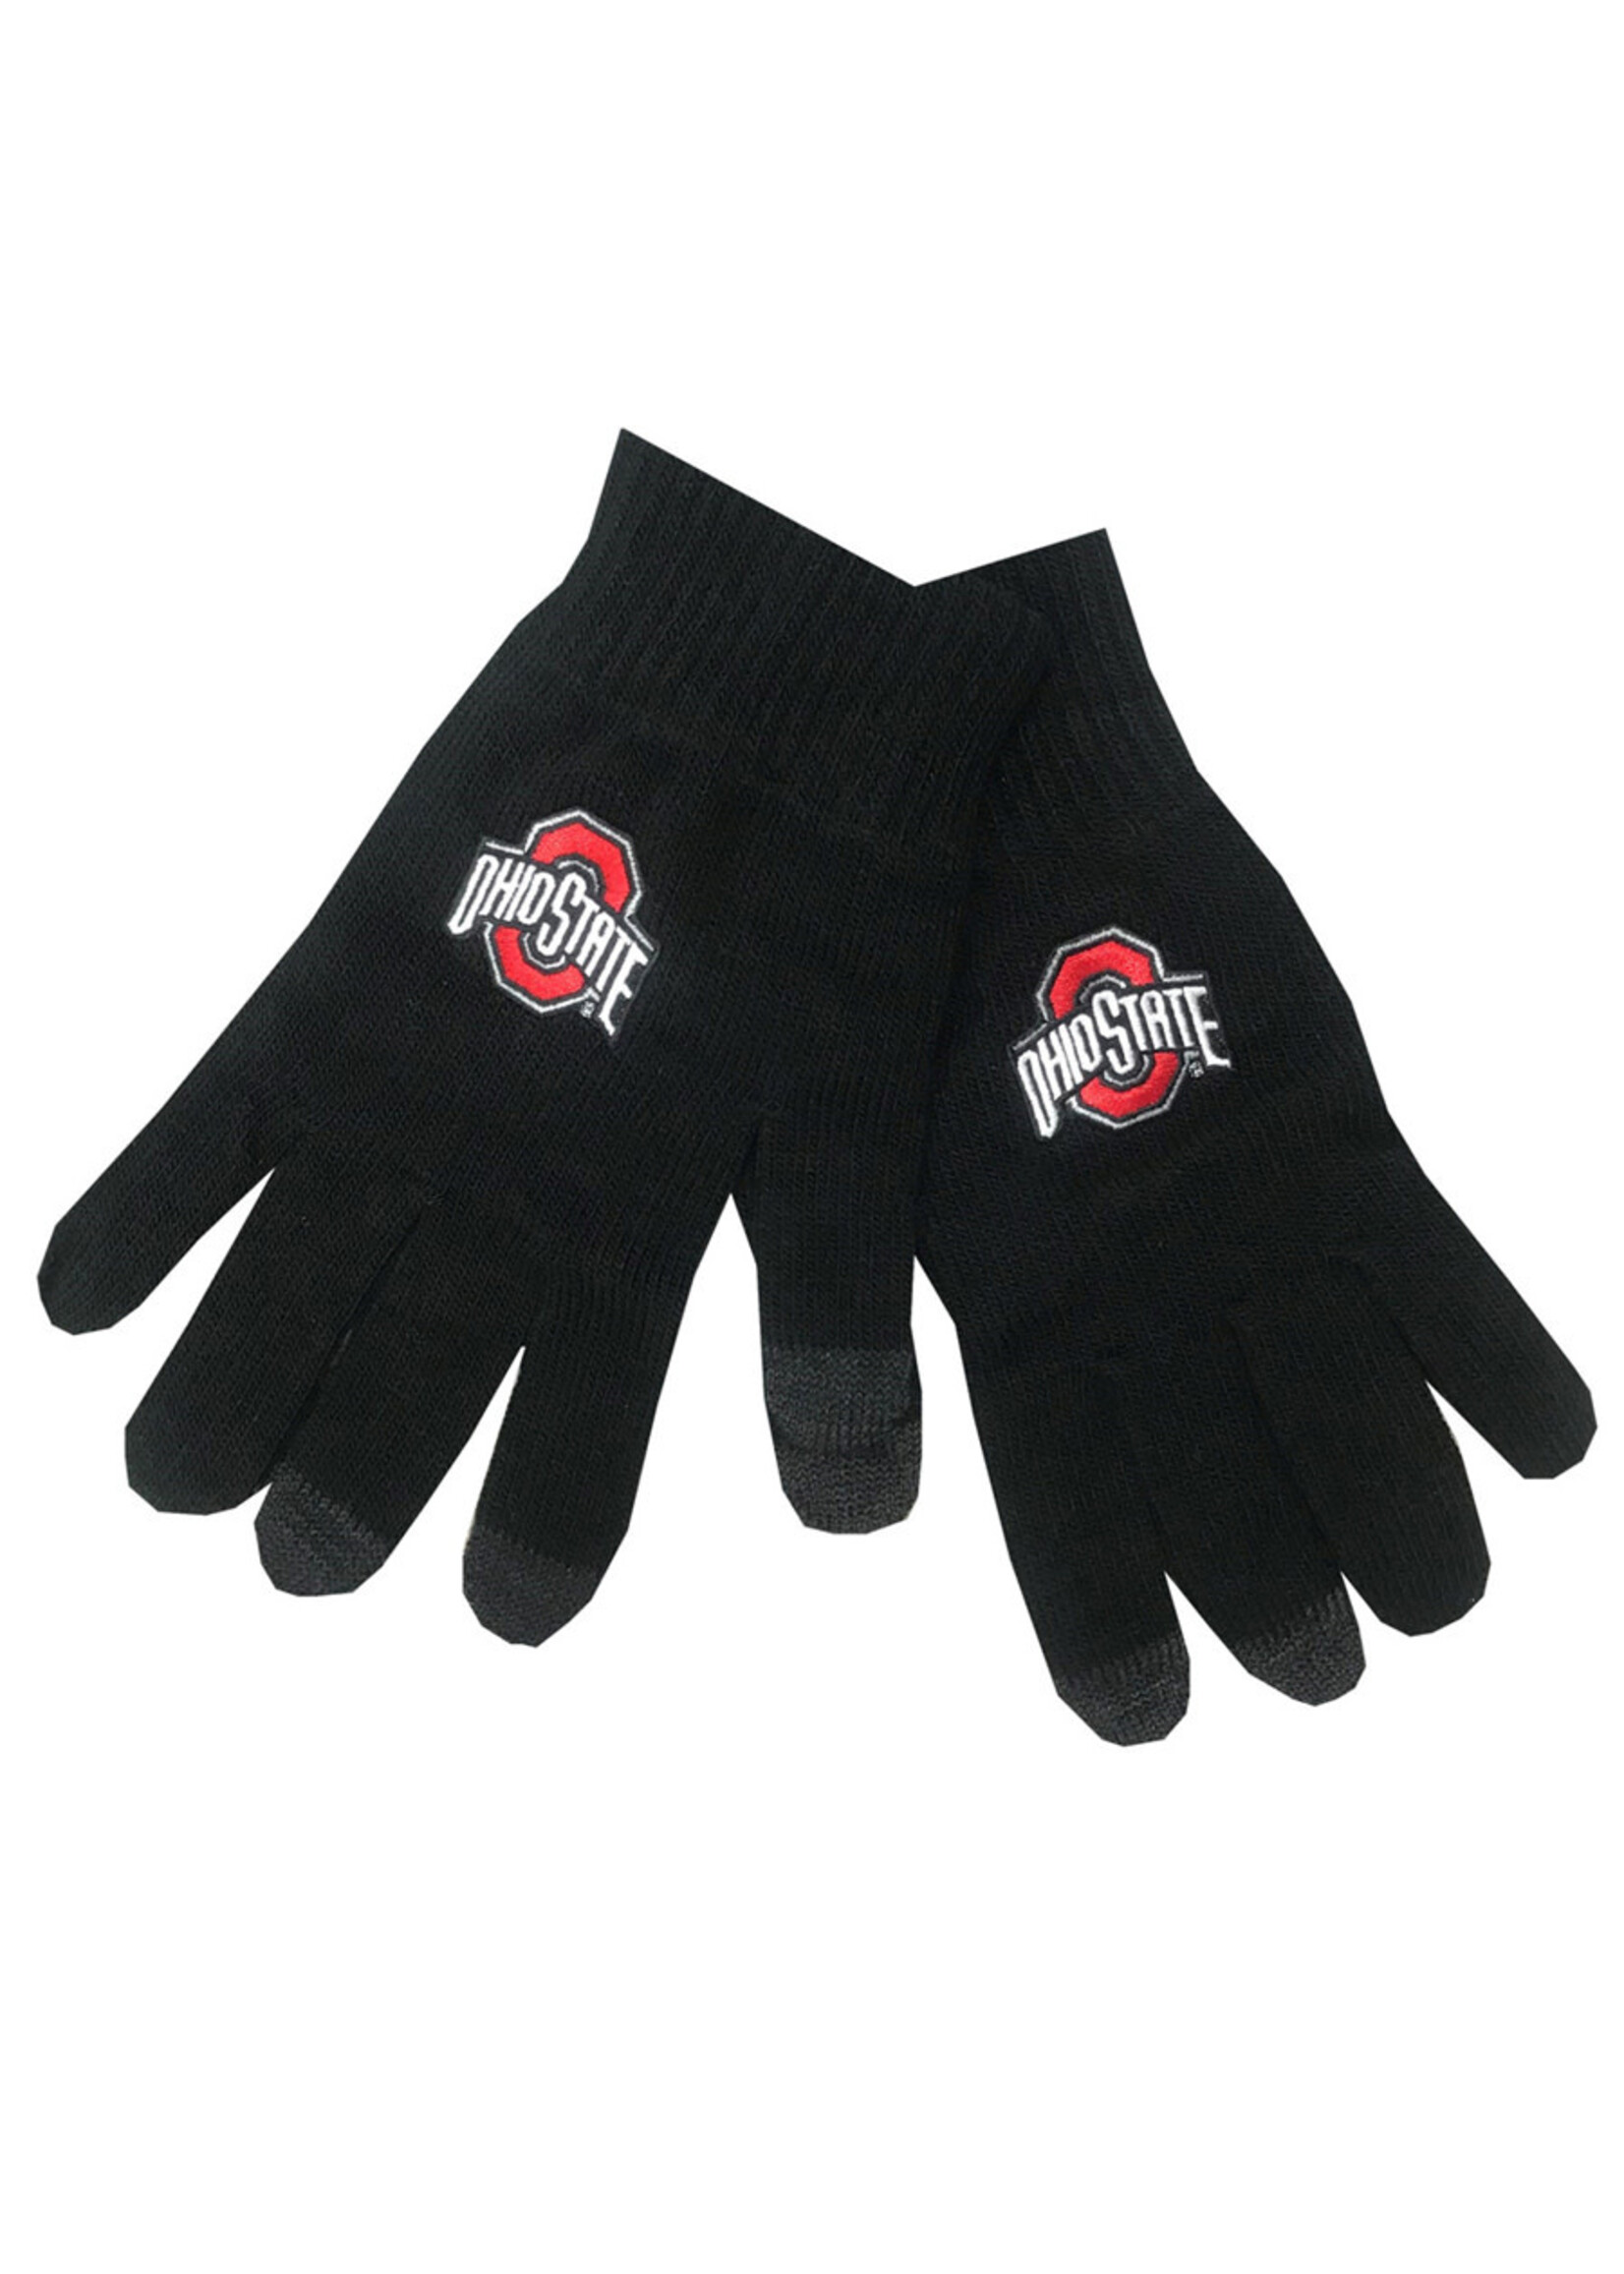 Ohio State Buckeyes iText Gloves - Black